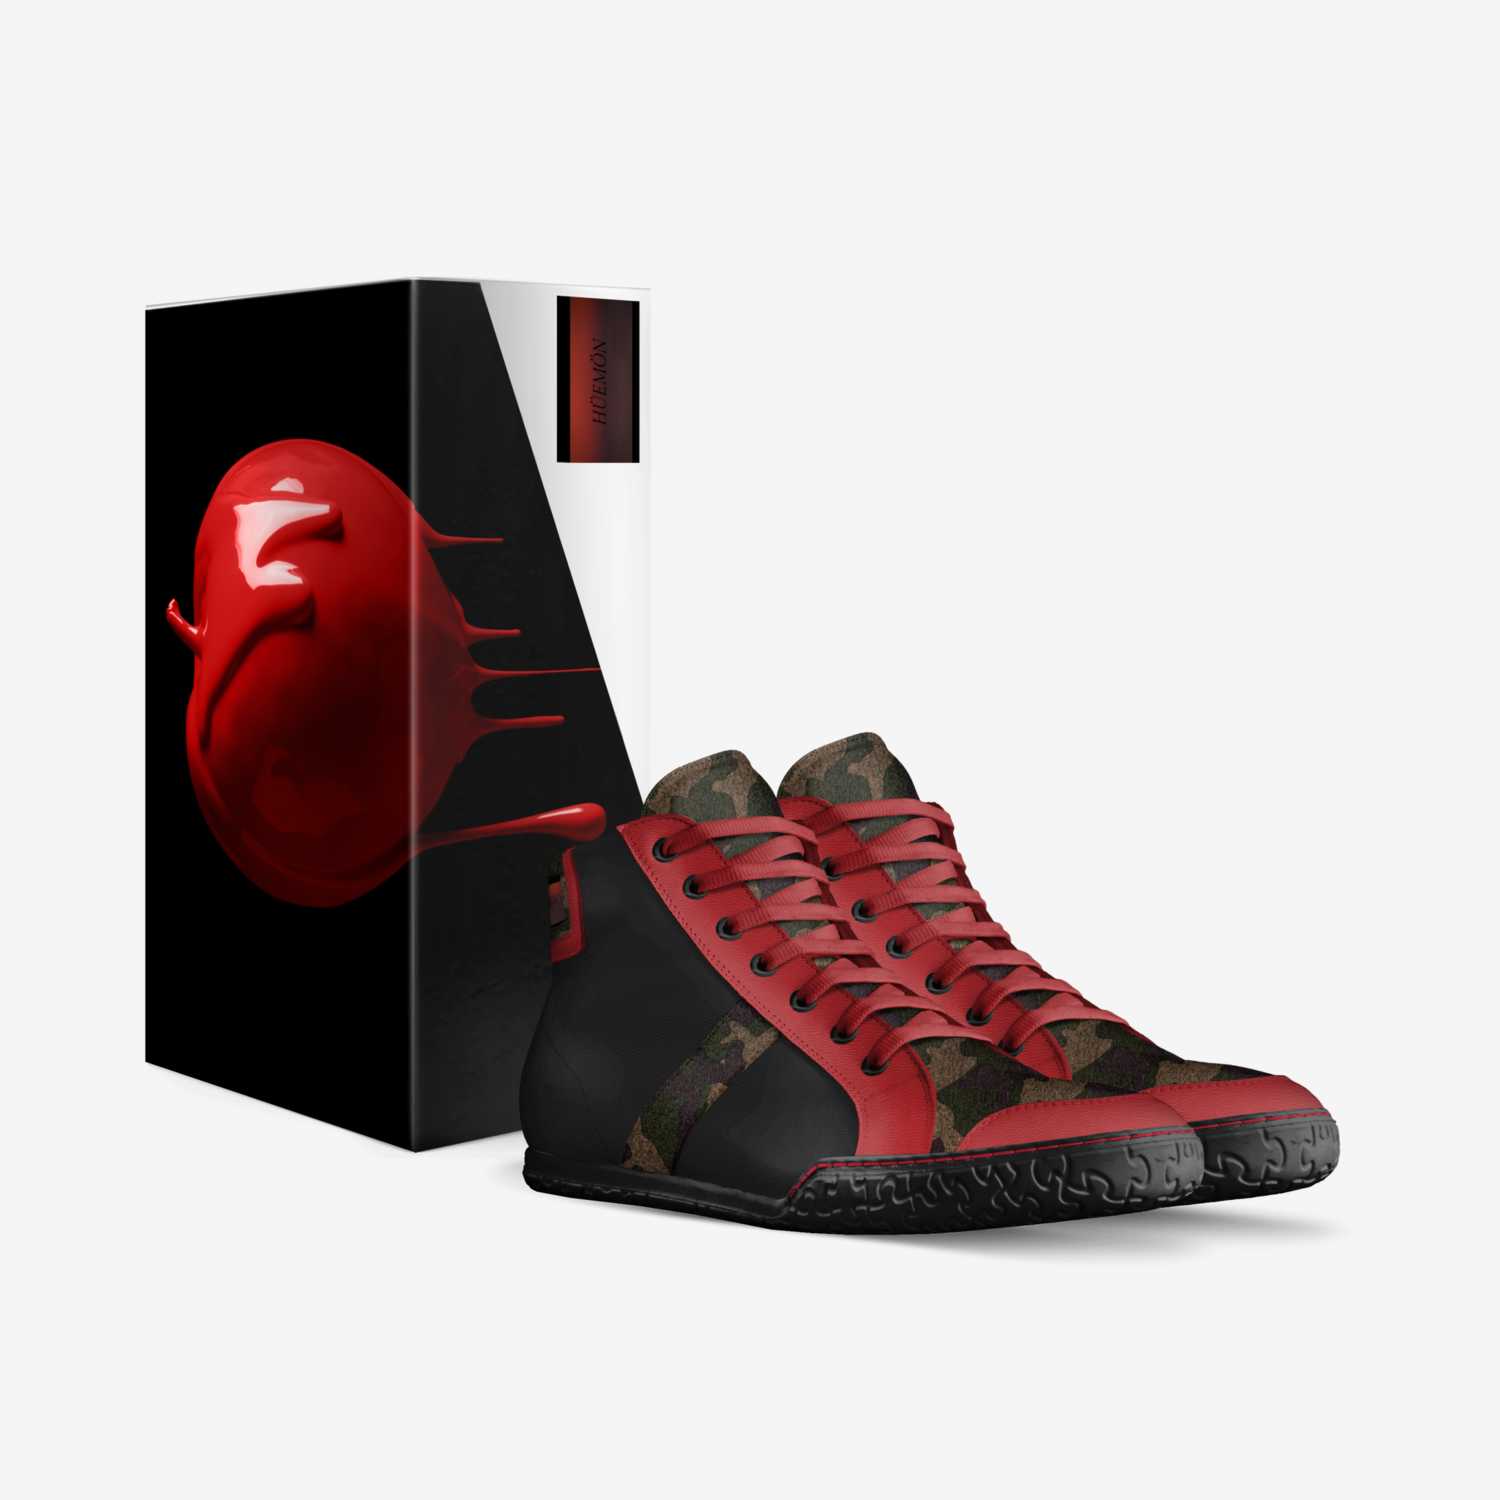 HÜEMÖN custom made in Italy shoes by Shariffa Nyan | Box view